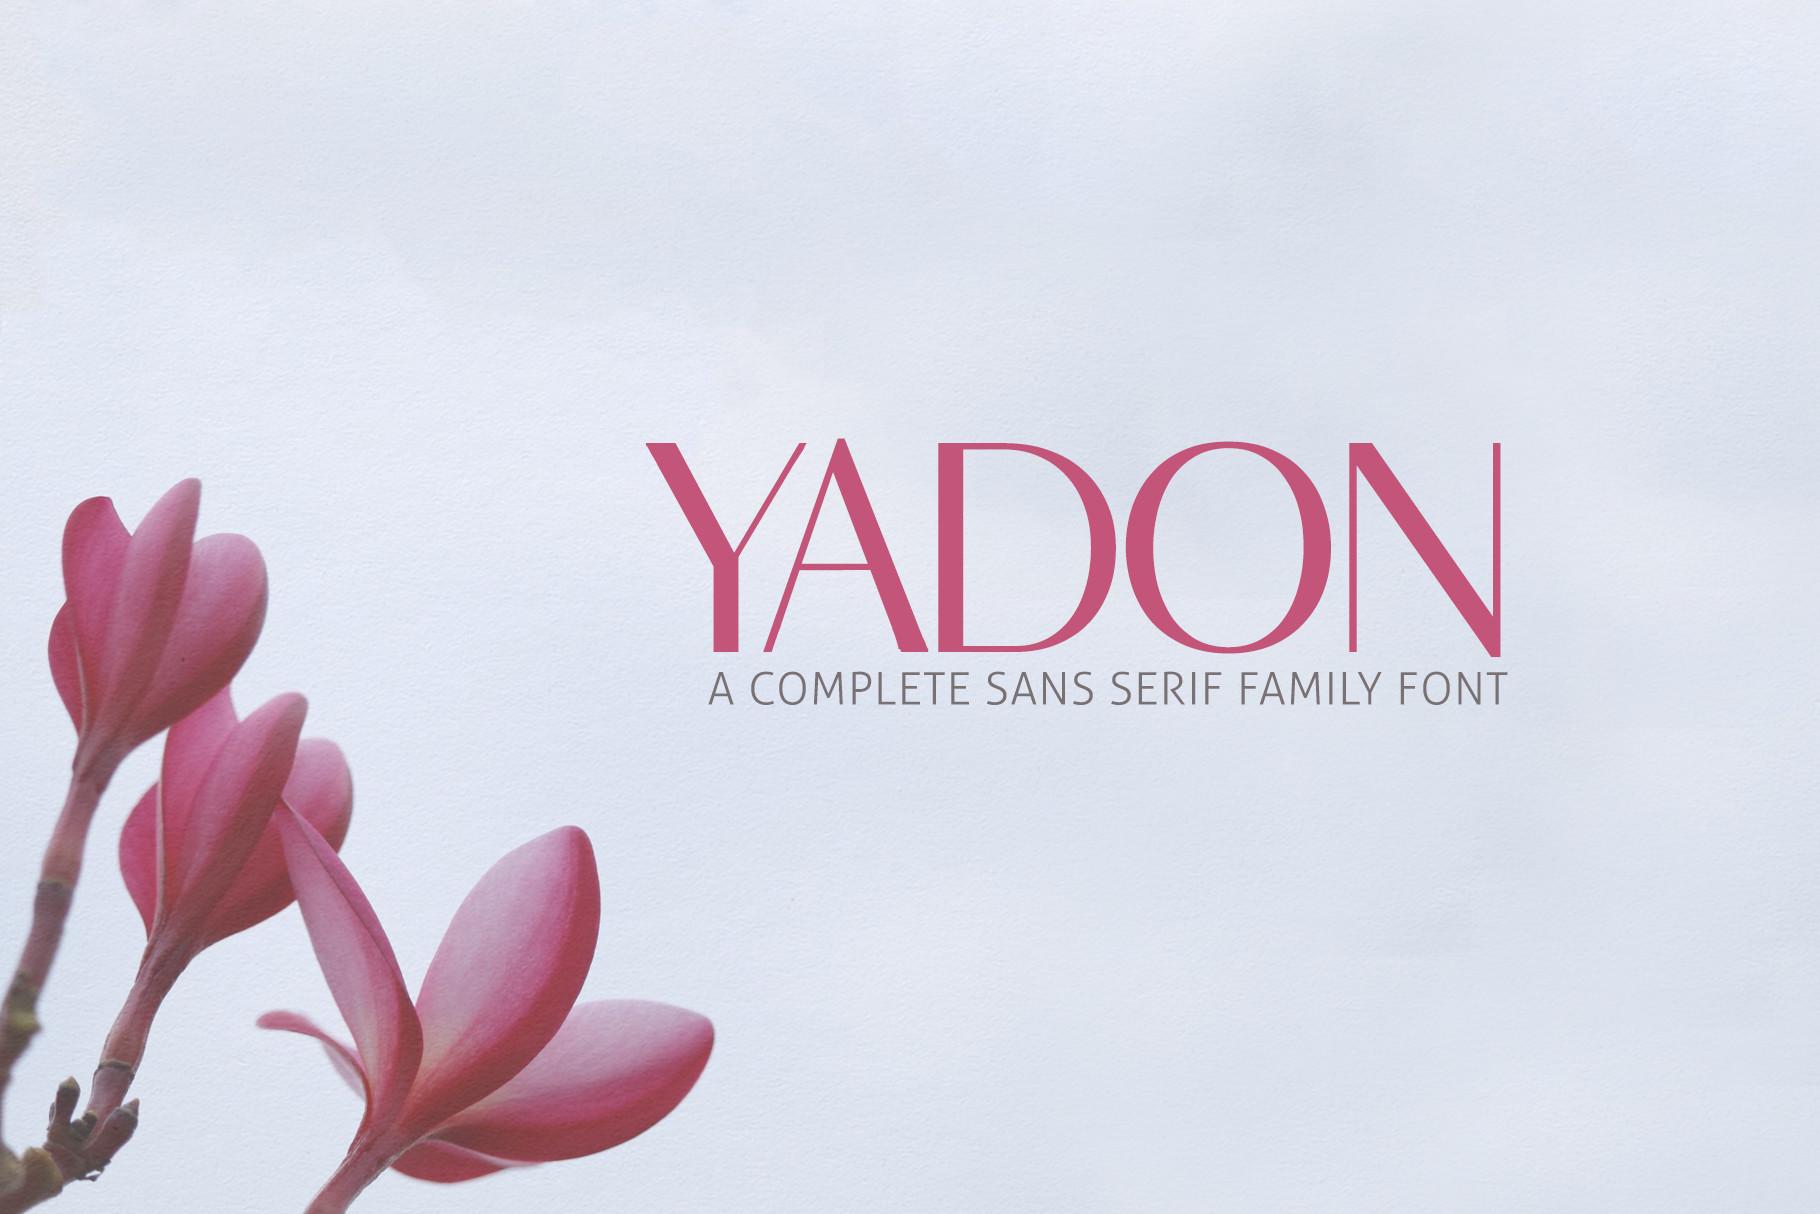 Yadon Family Font